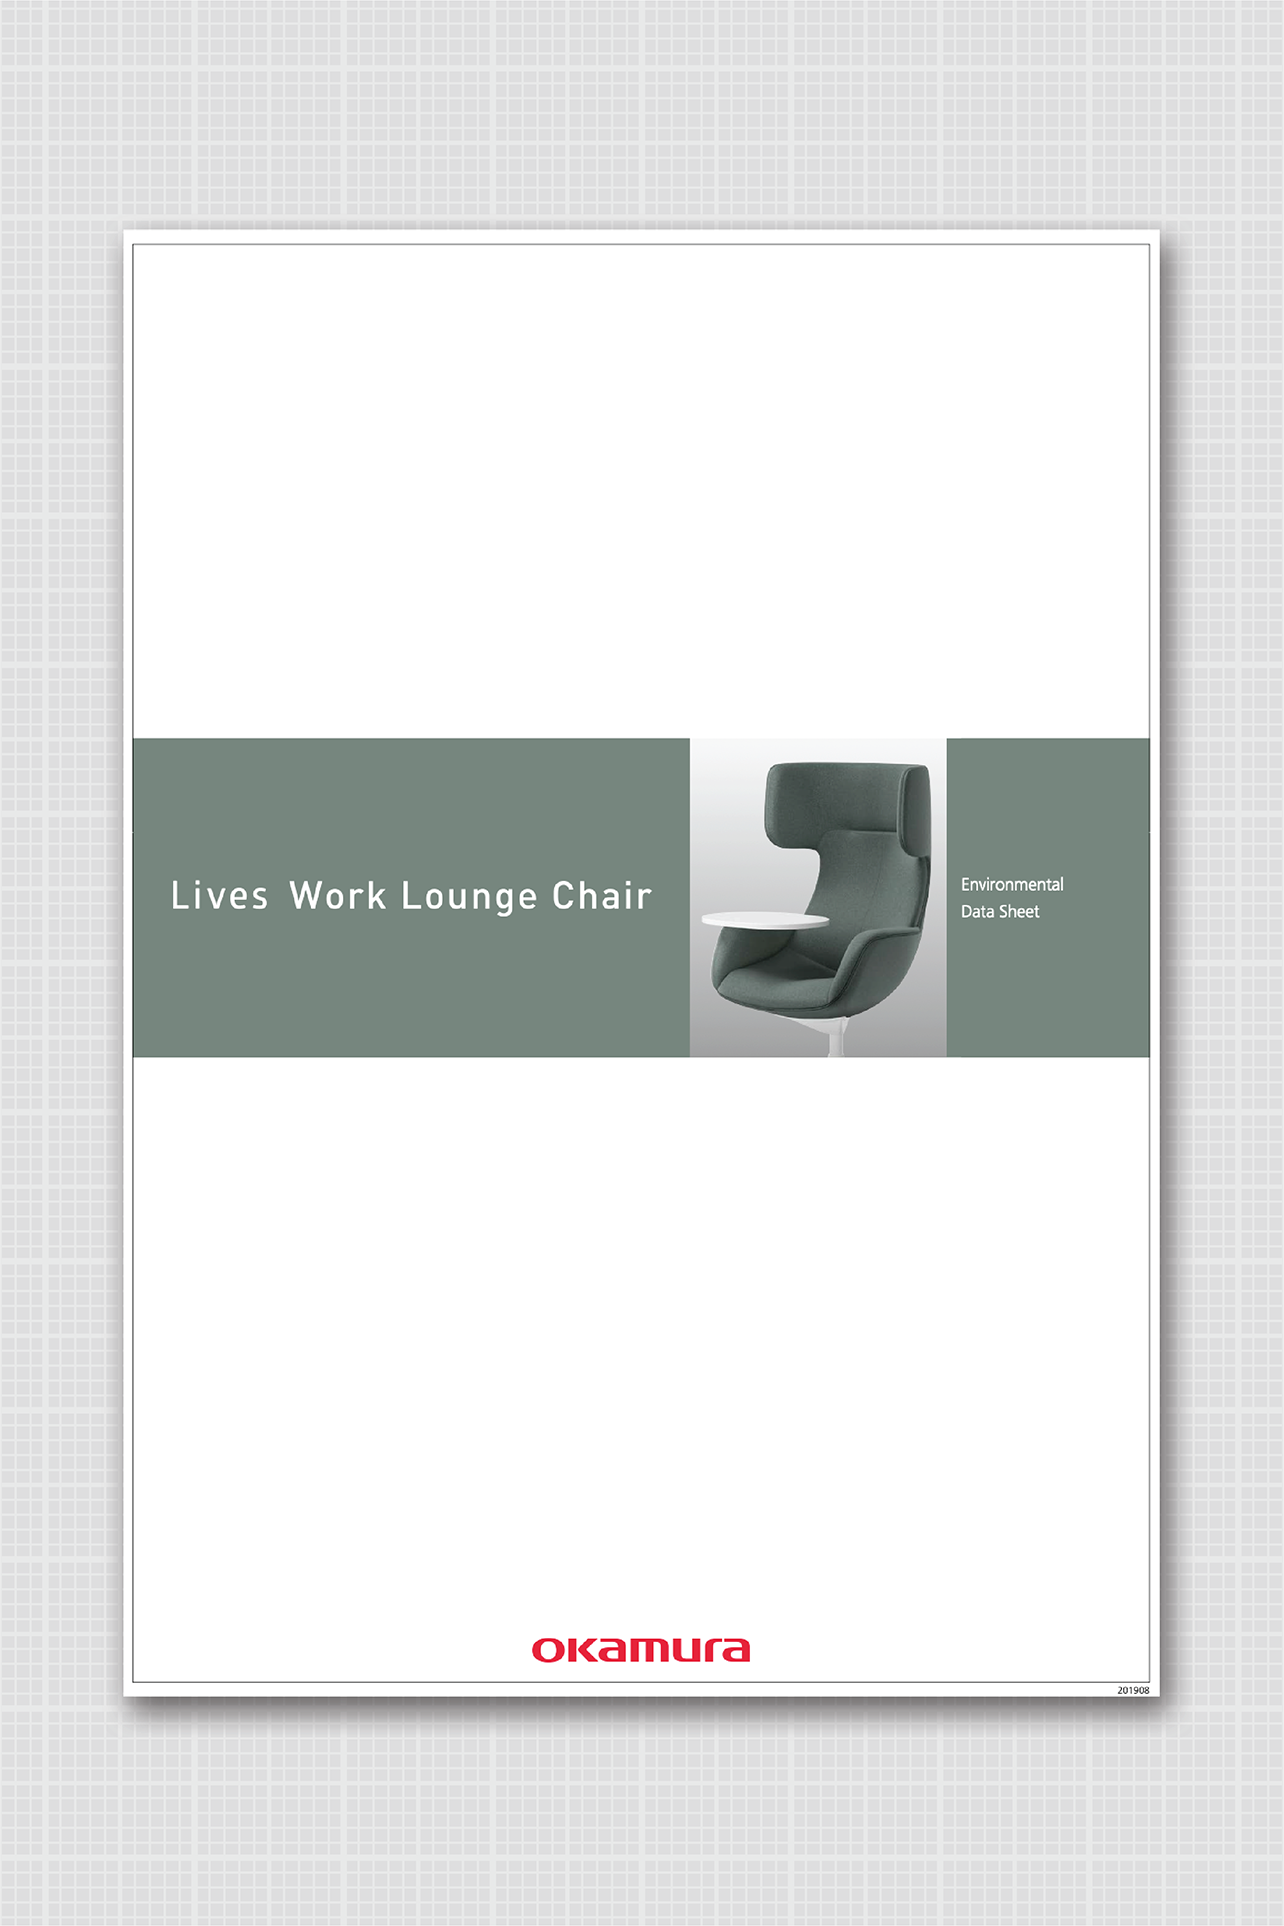 Lives Work Lounge Chair Environmental Data Sheet